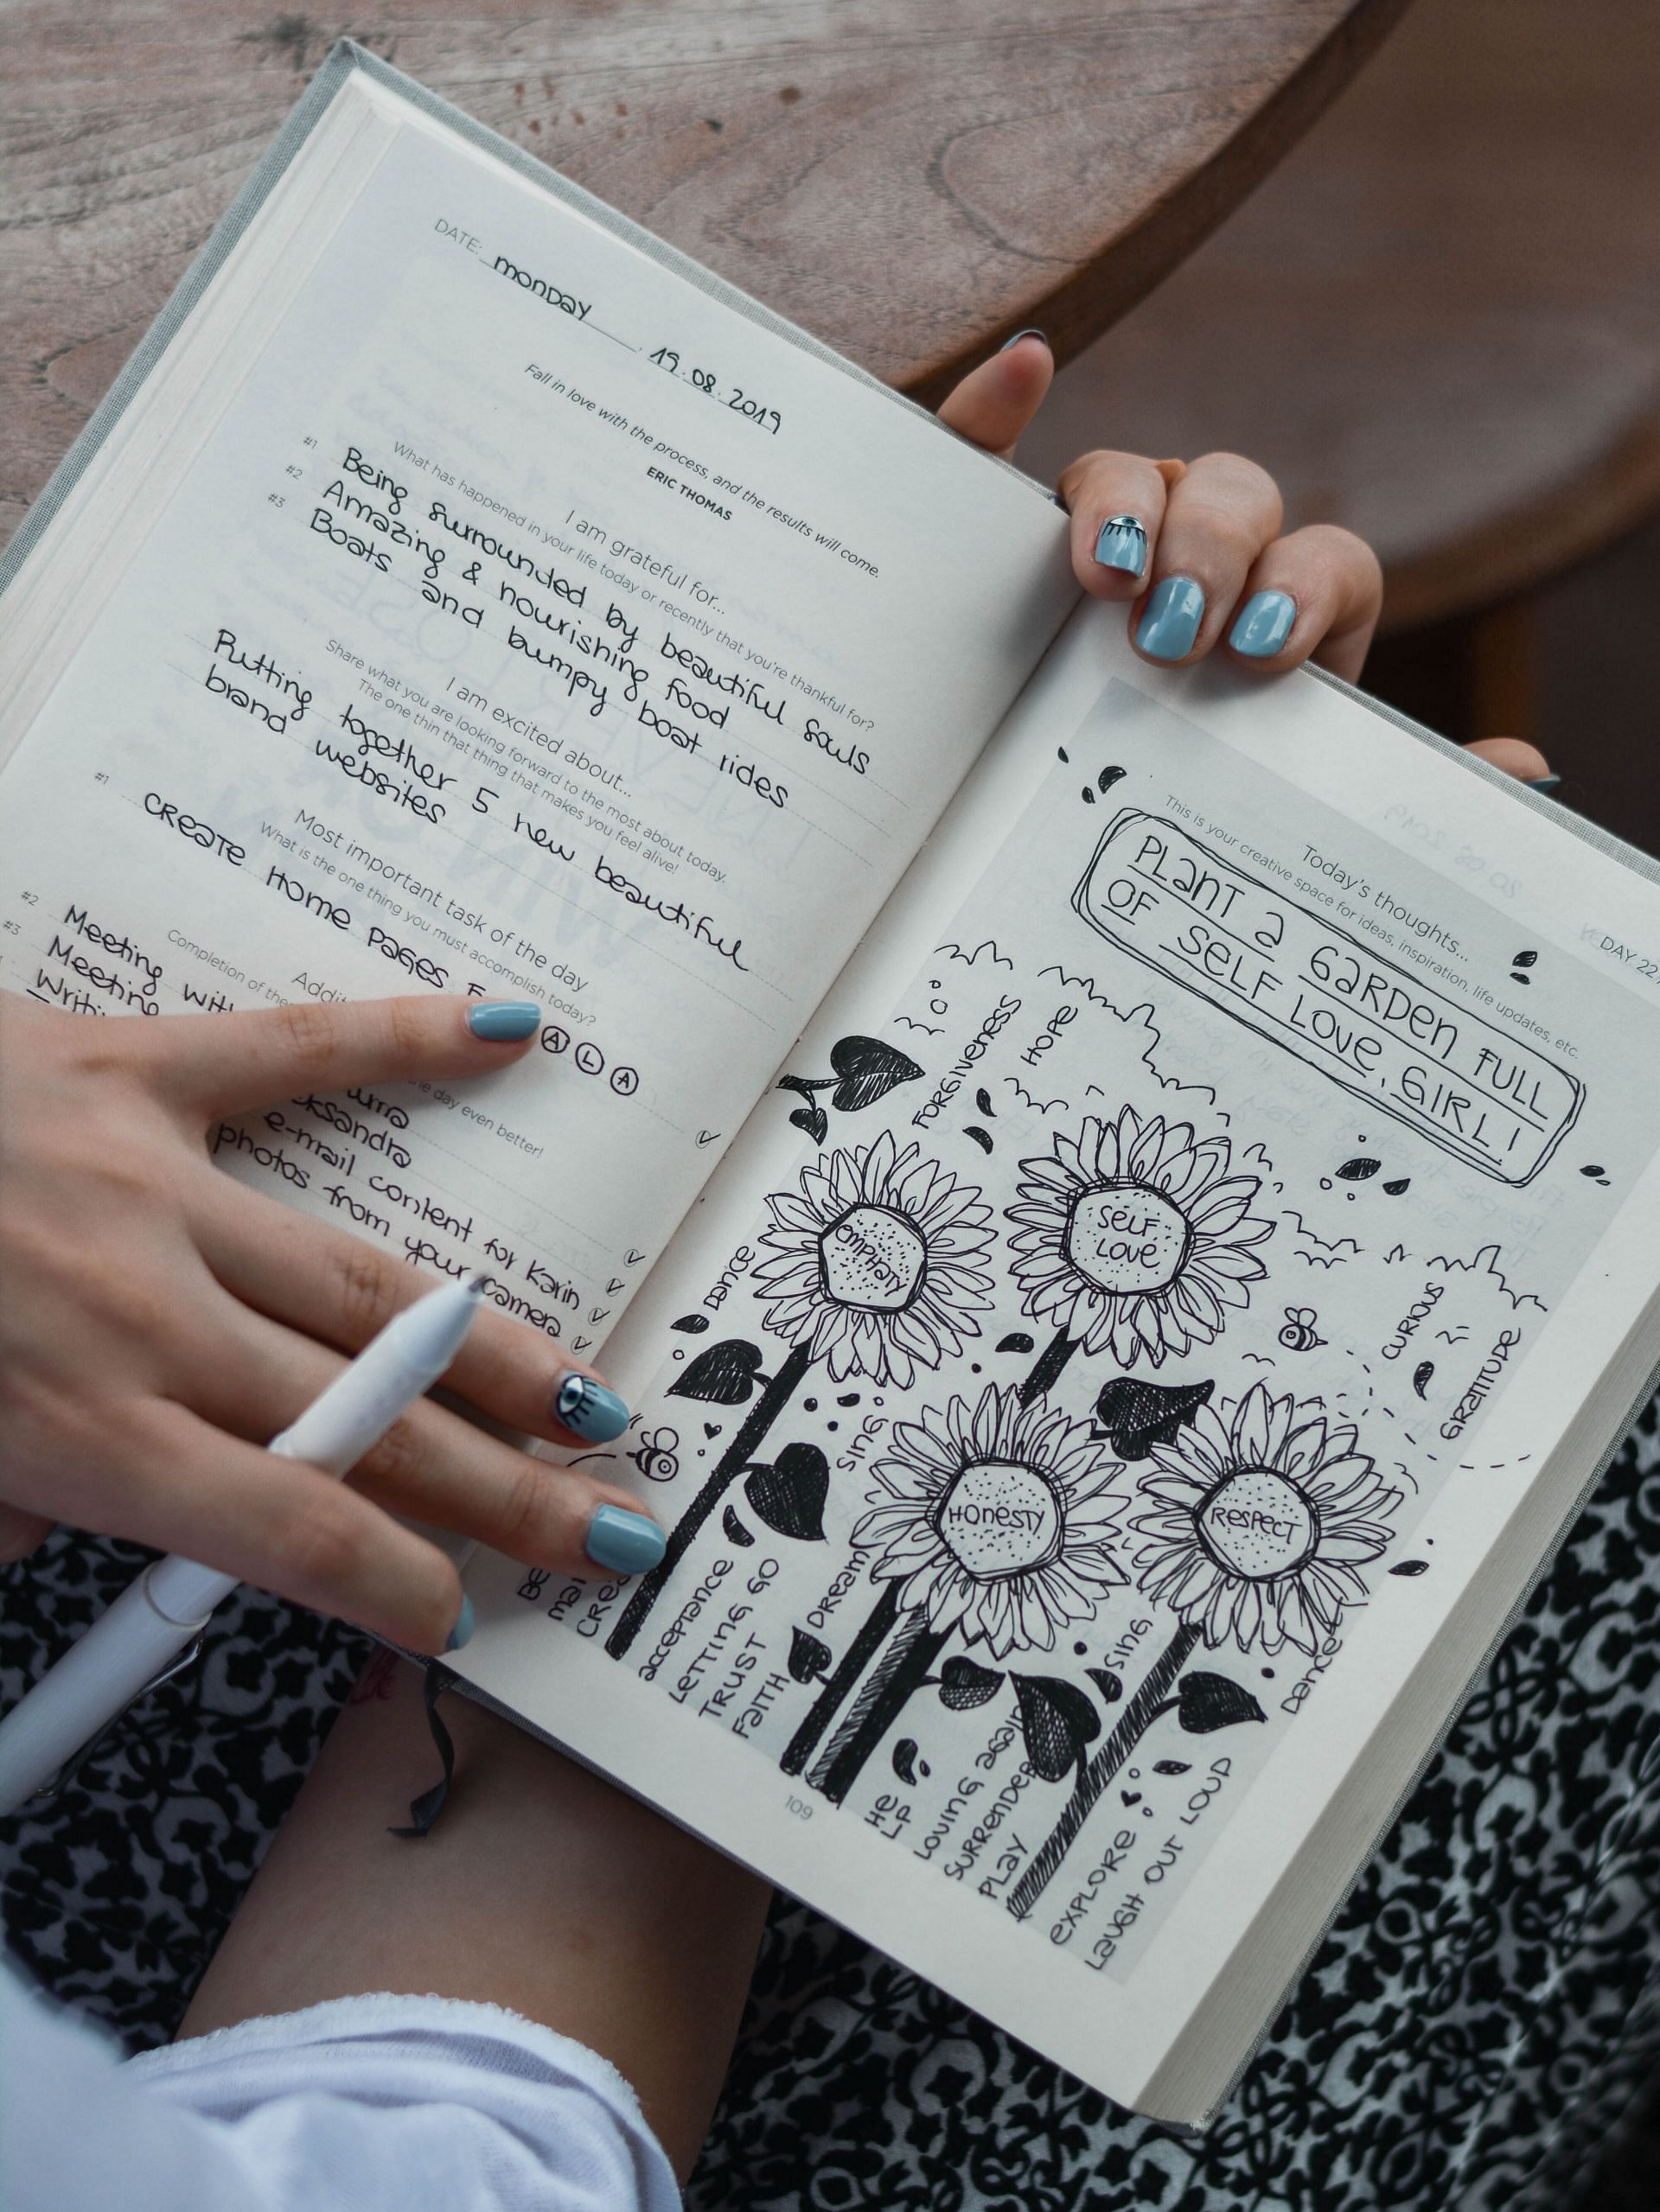 Creativity and benefits of doodling go hand in hand. (Image via Unsplash/ Prophsee Journals)